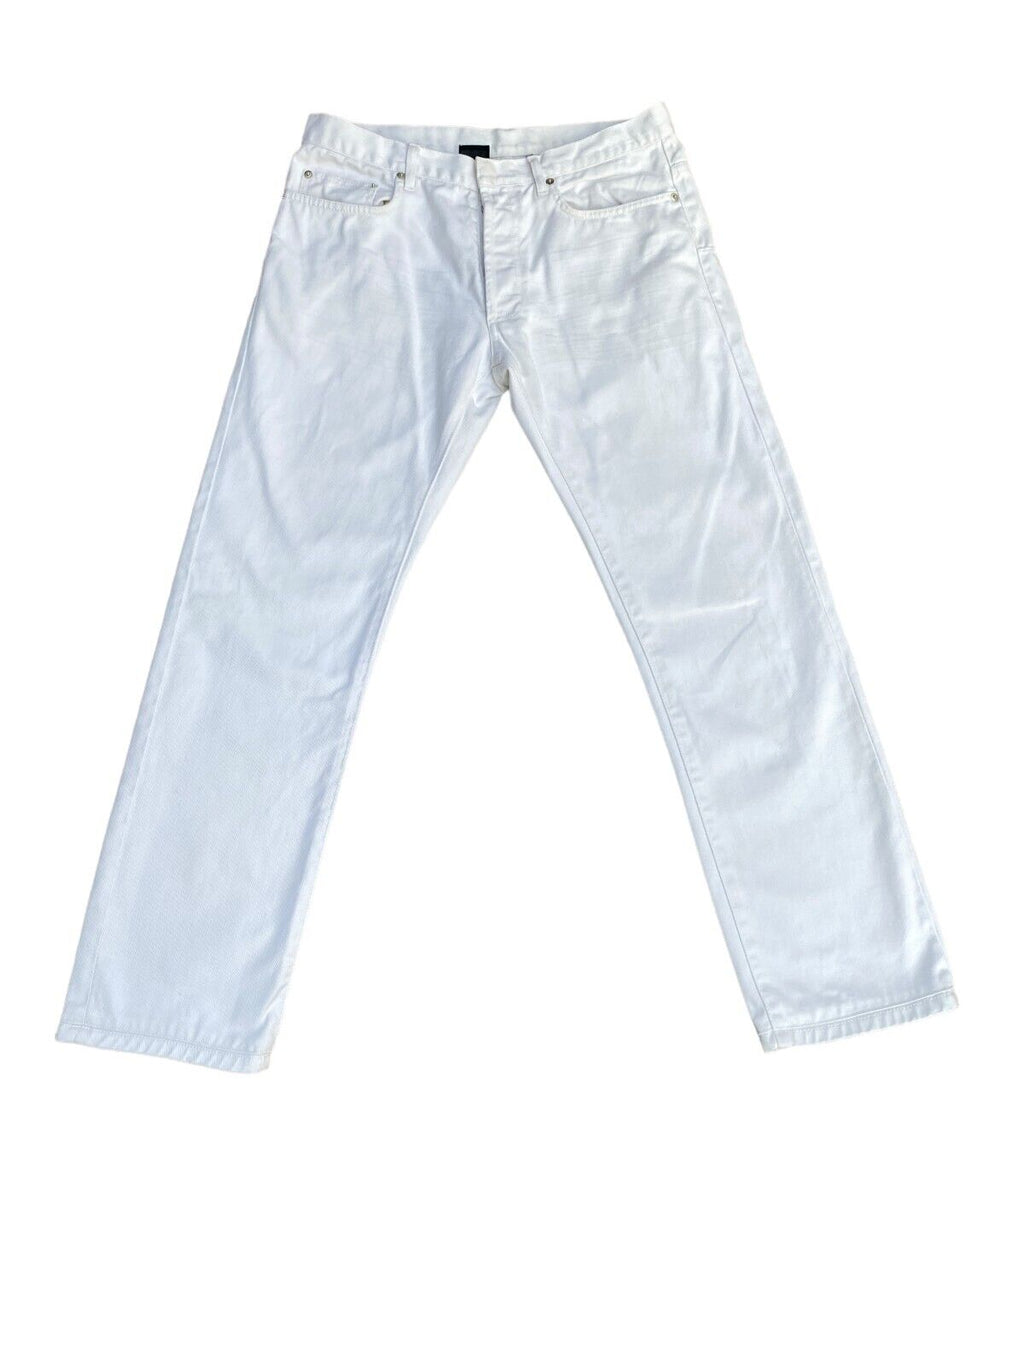 White Denim Jeans Slim Fit